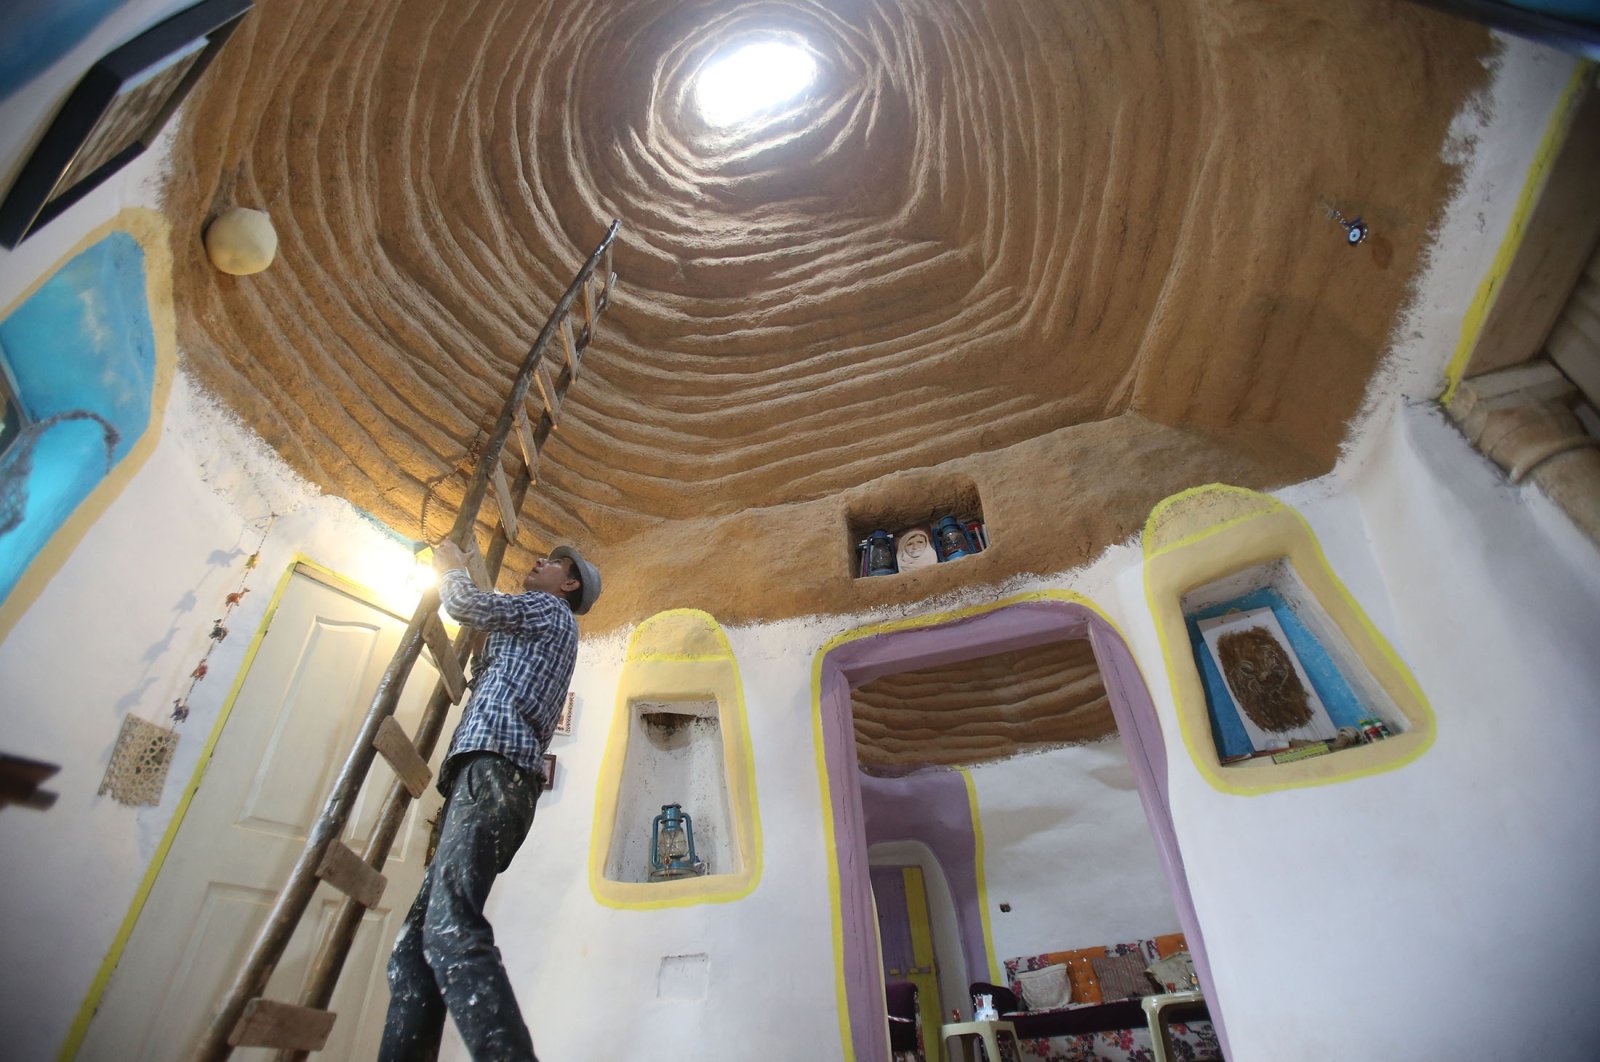 Hamed Yusuf Nazzal puts up a ladder in his house in Al-Mafraq, Jordan, Jan. 6, 2022. (AA Photo)